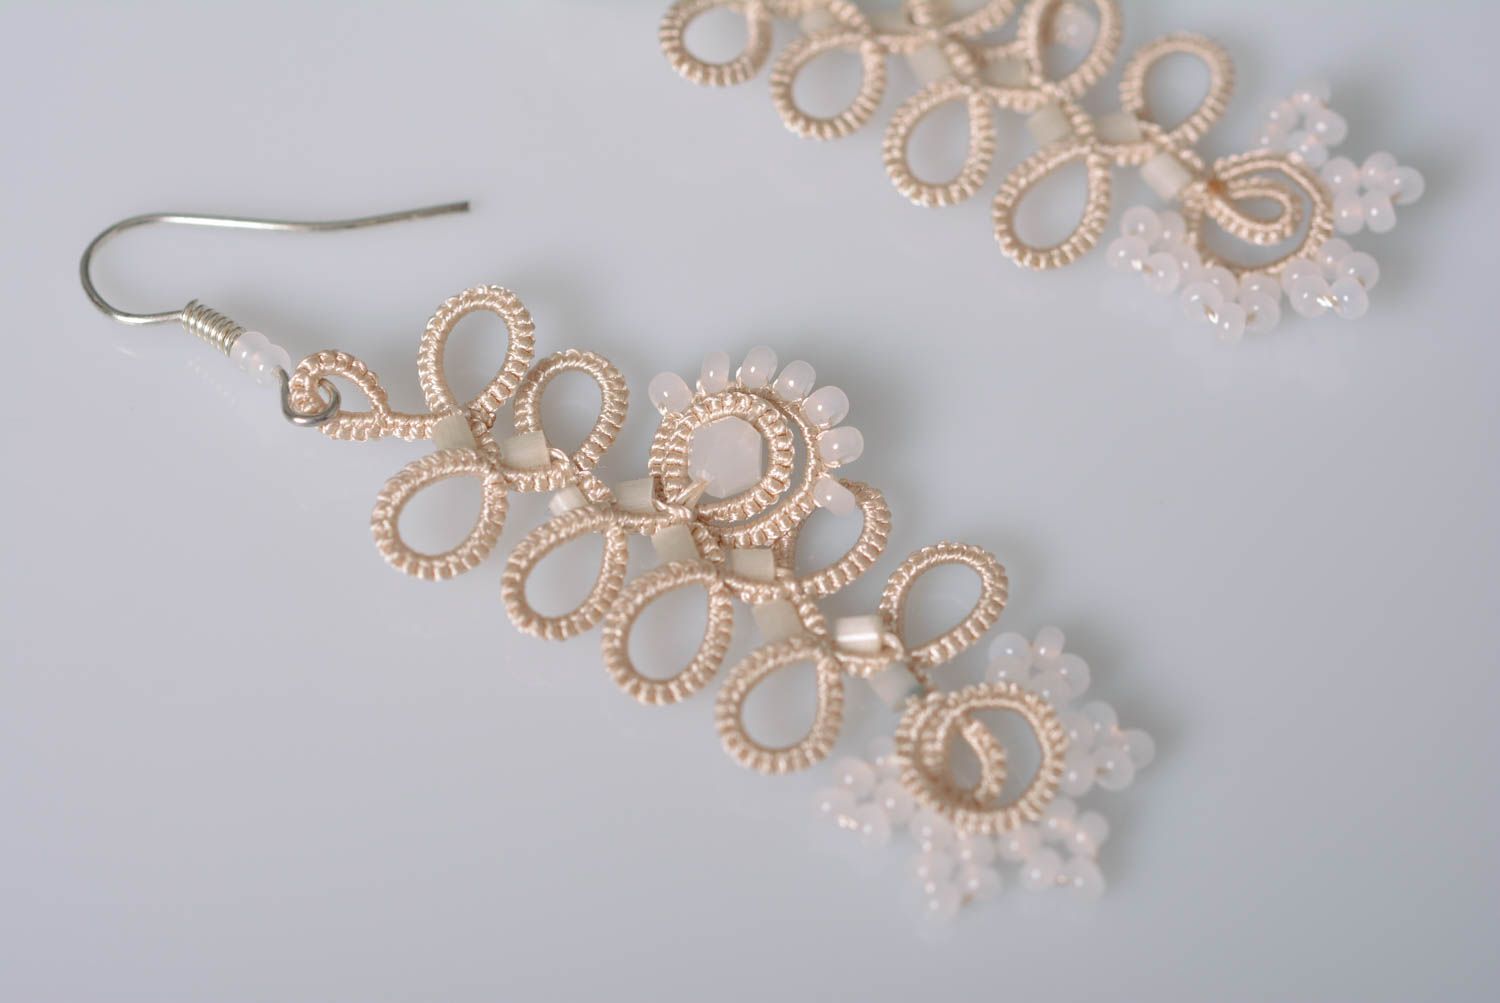 Handmade earrings designer jewelry fashion accessories dangling earrings photo 1